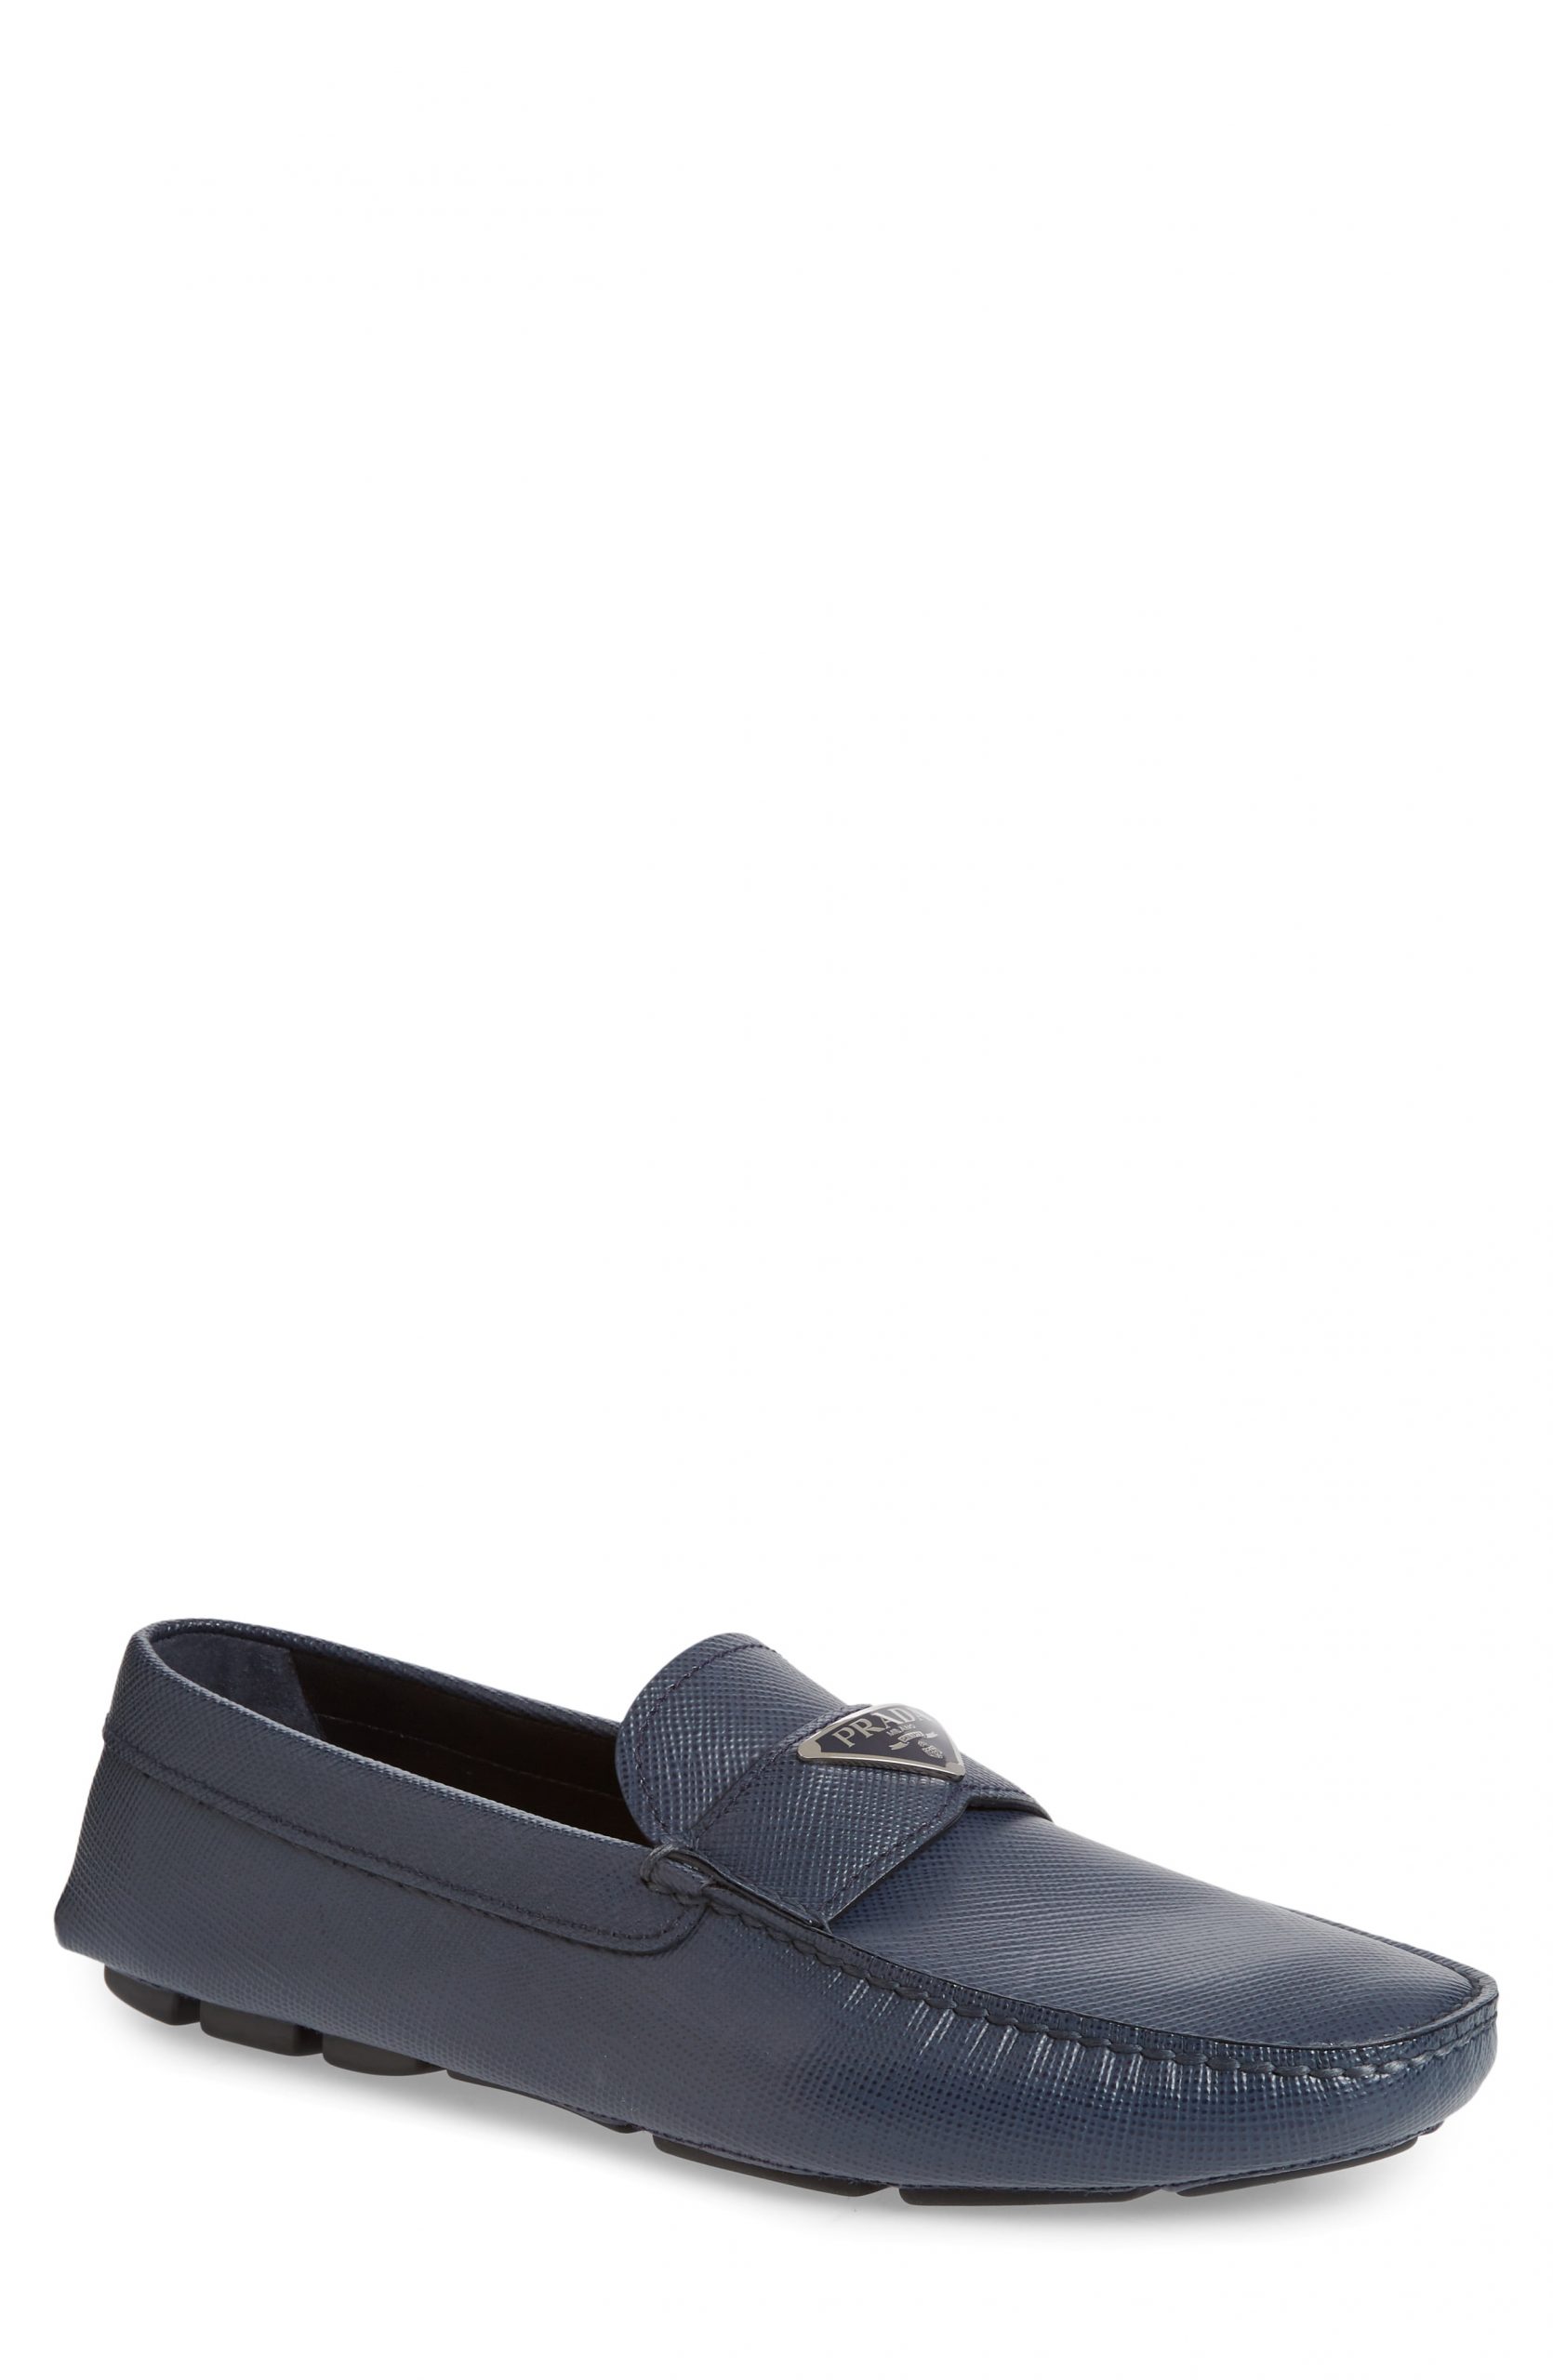 Men’s Prada Driving Shoe, Size 8US - Blue | The Fashionisto